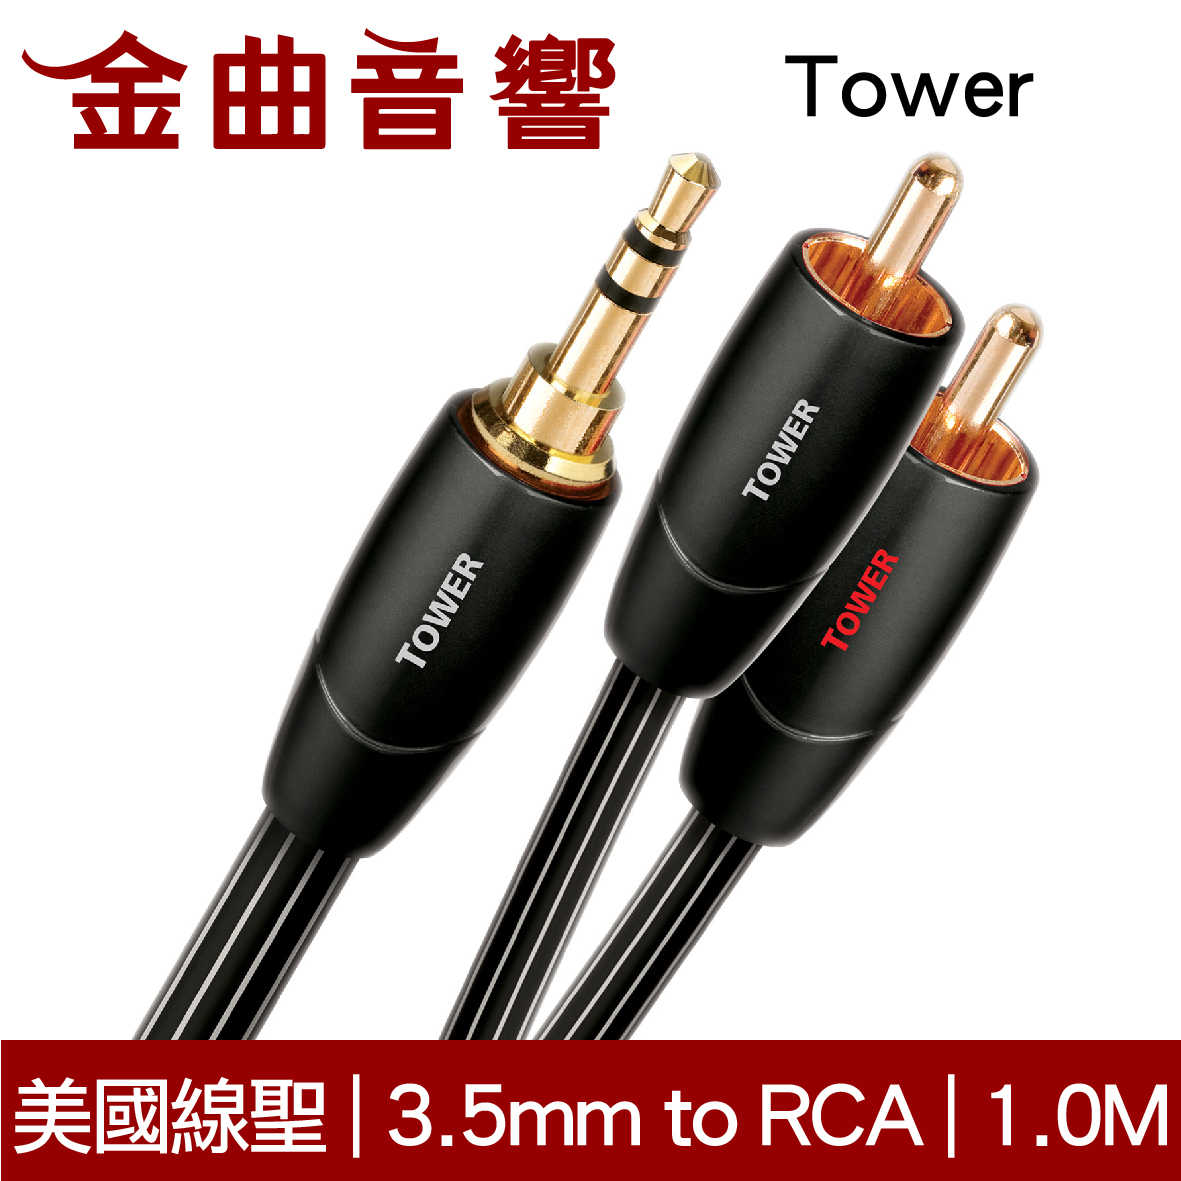 Audioquest 美國線聖 Tower 3.5mm to RCA 訊號線 1M | 金曲音響